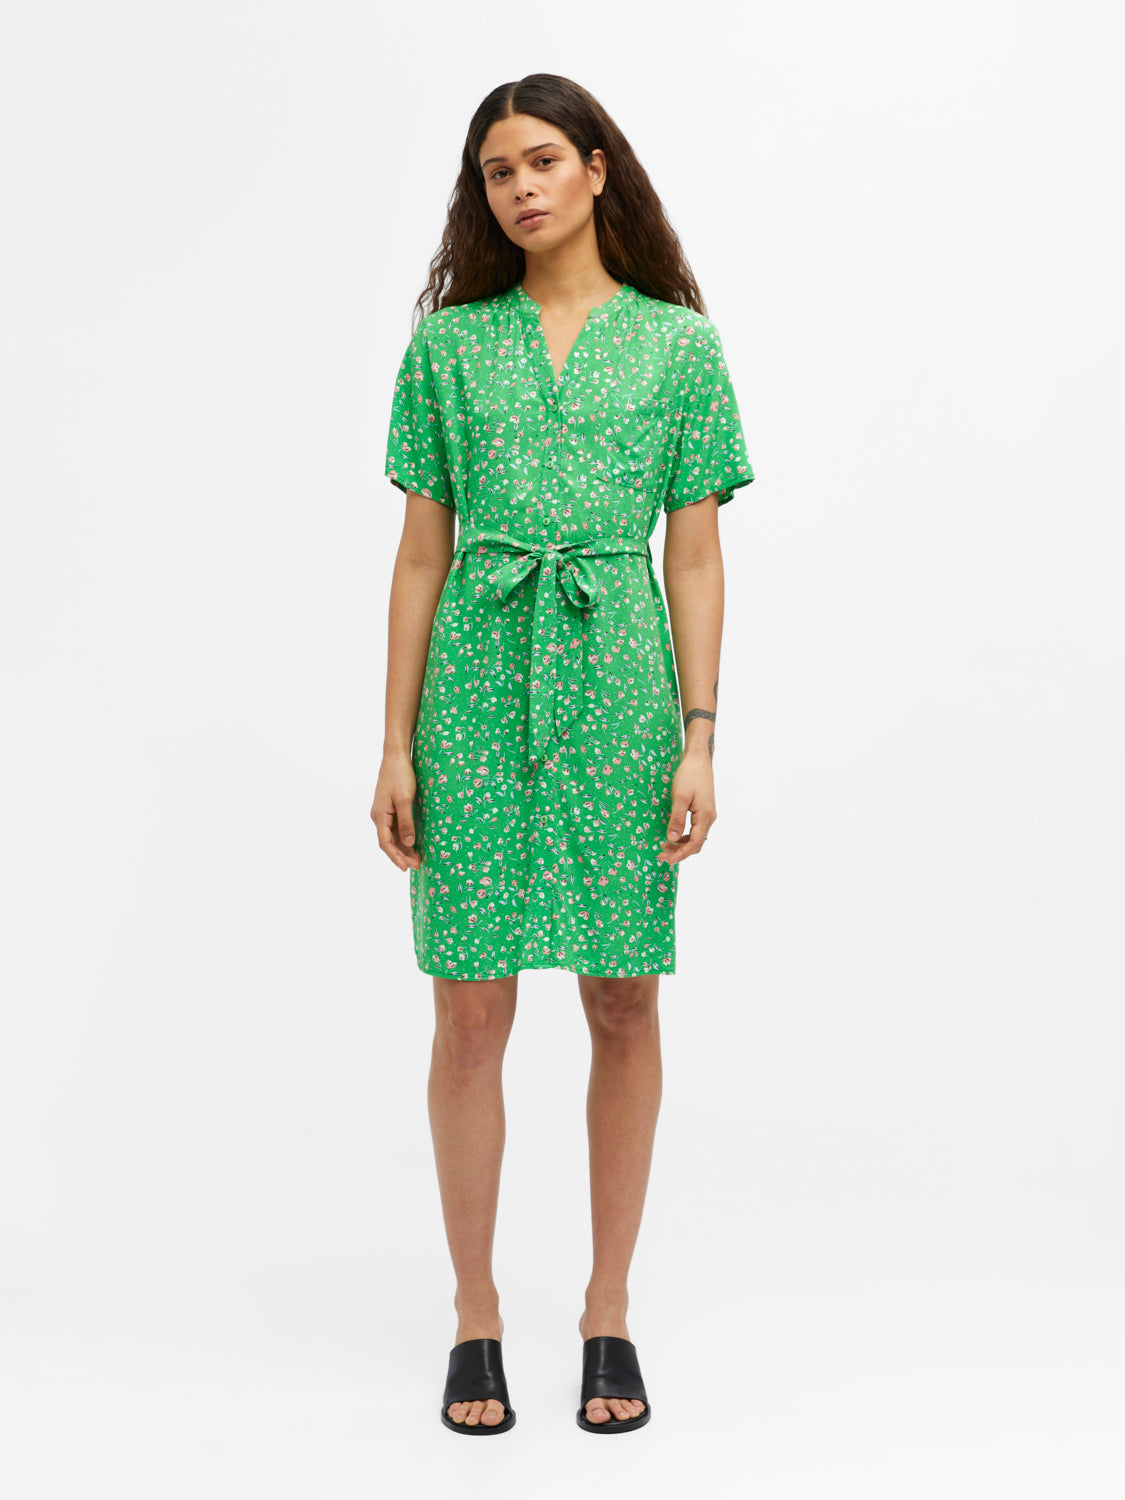 OBJEMA Dress - Fern Green